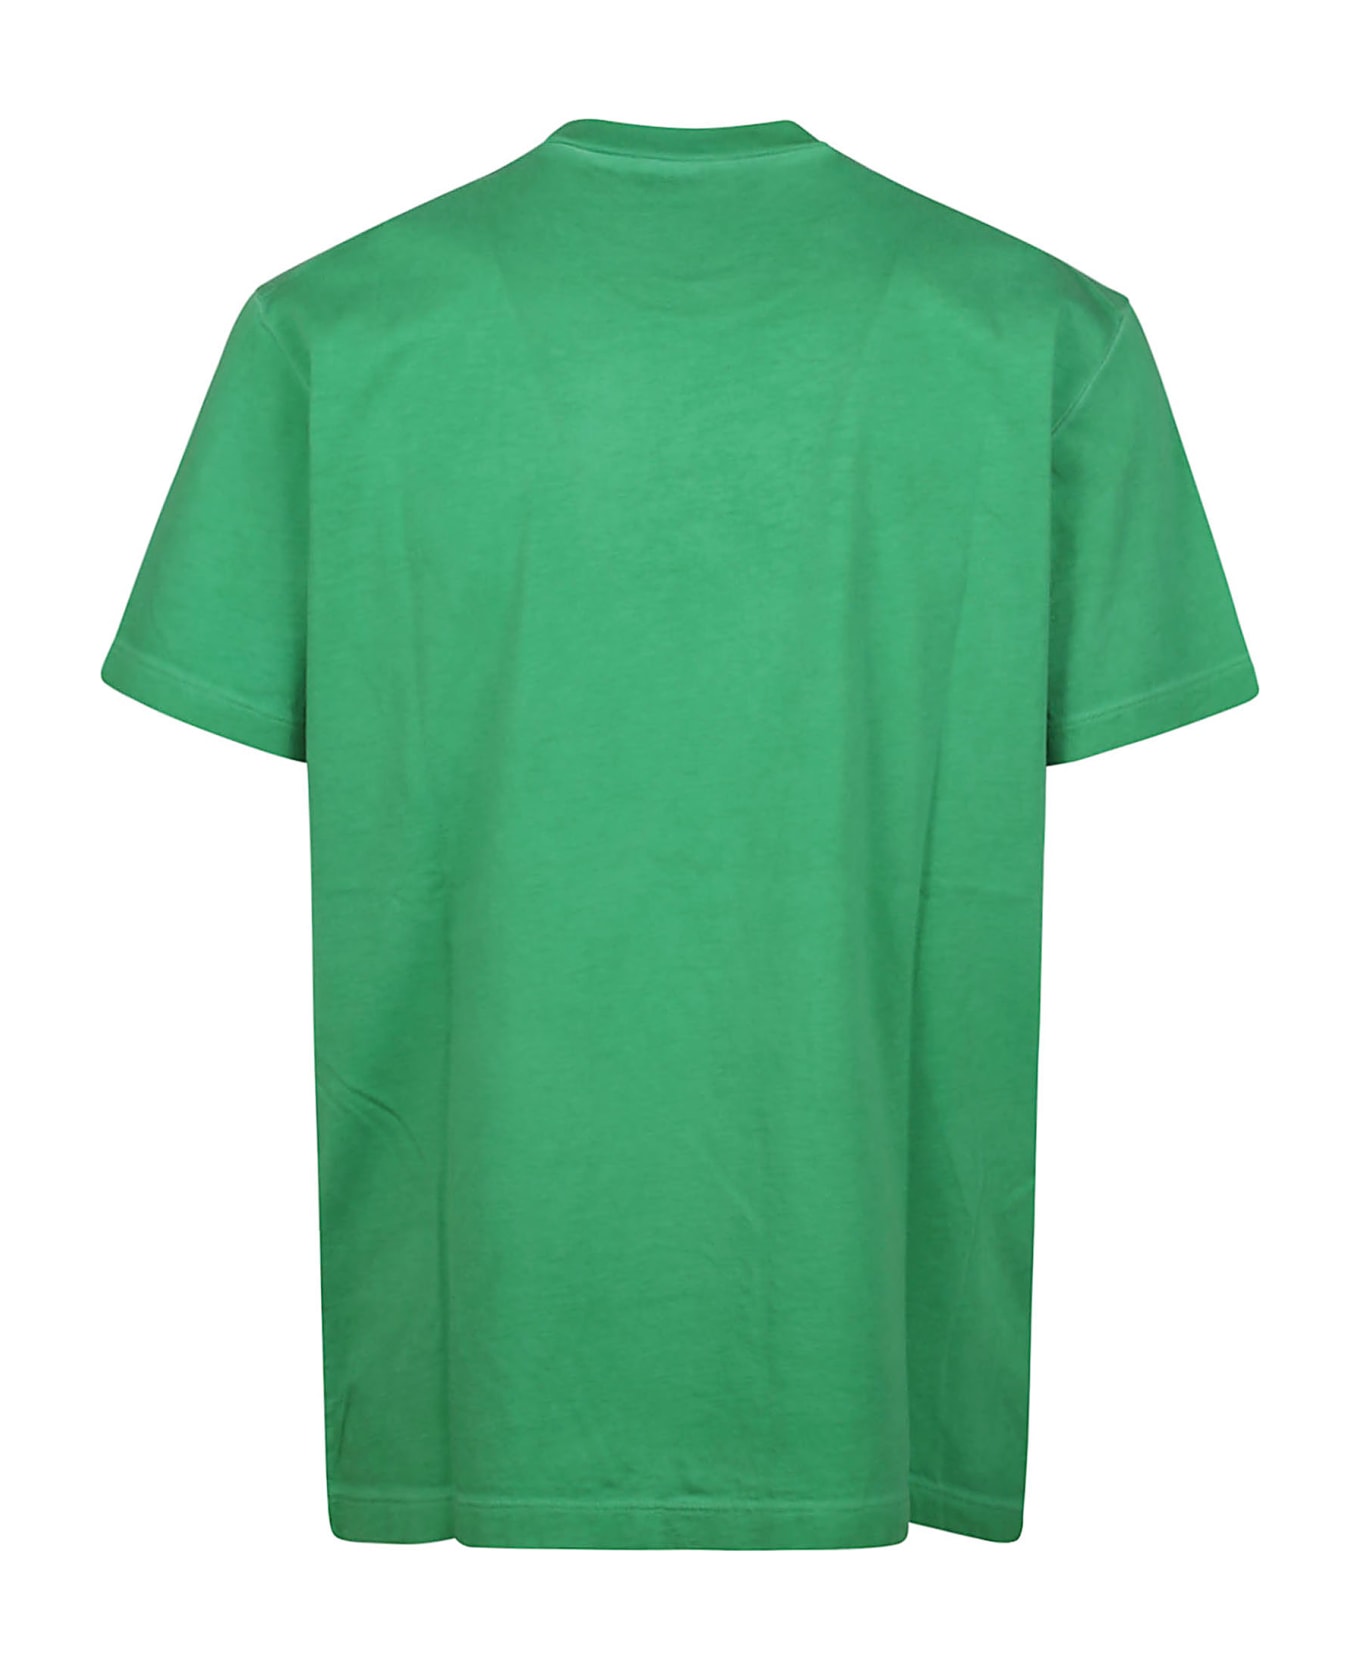 Dsquared2 Cool Fit T-shirt - Ultramarine Green